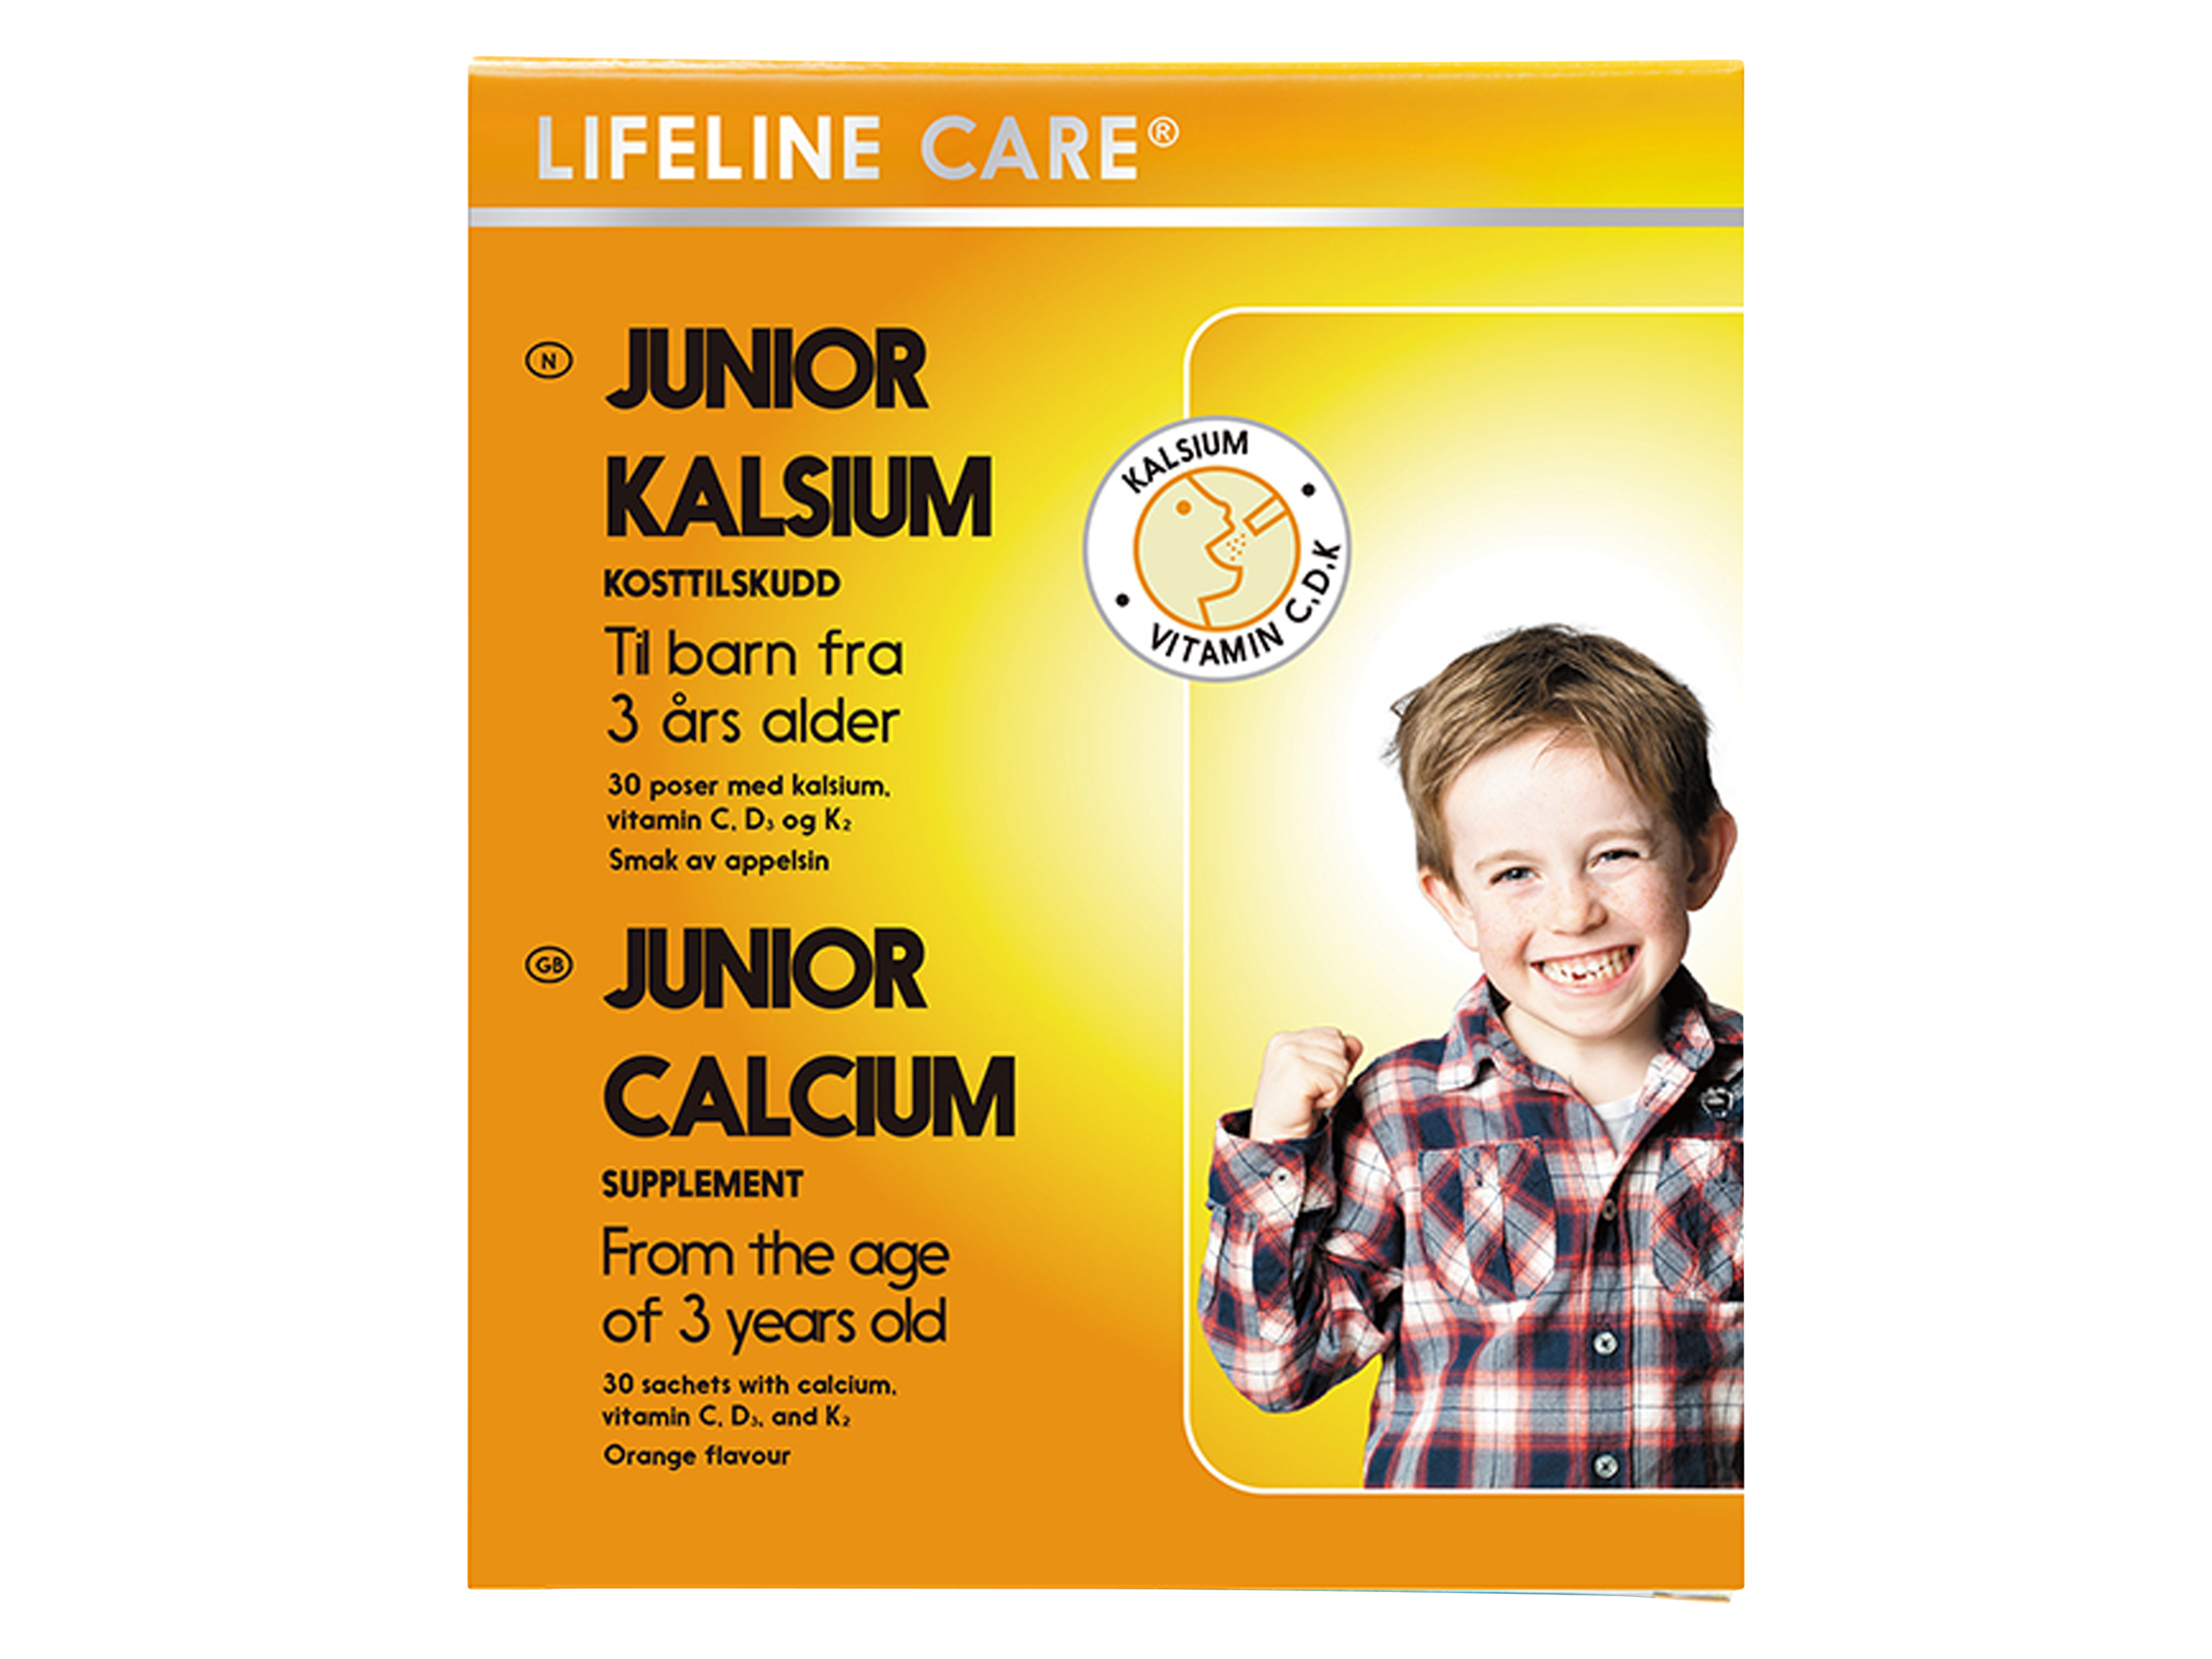 Lifeline Care Lifeline Junior Kalsium, 30 poser